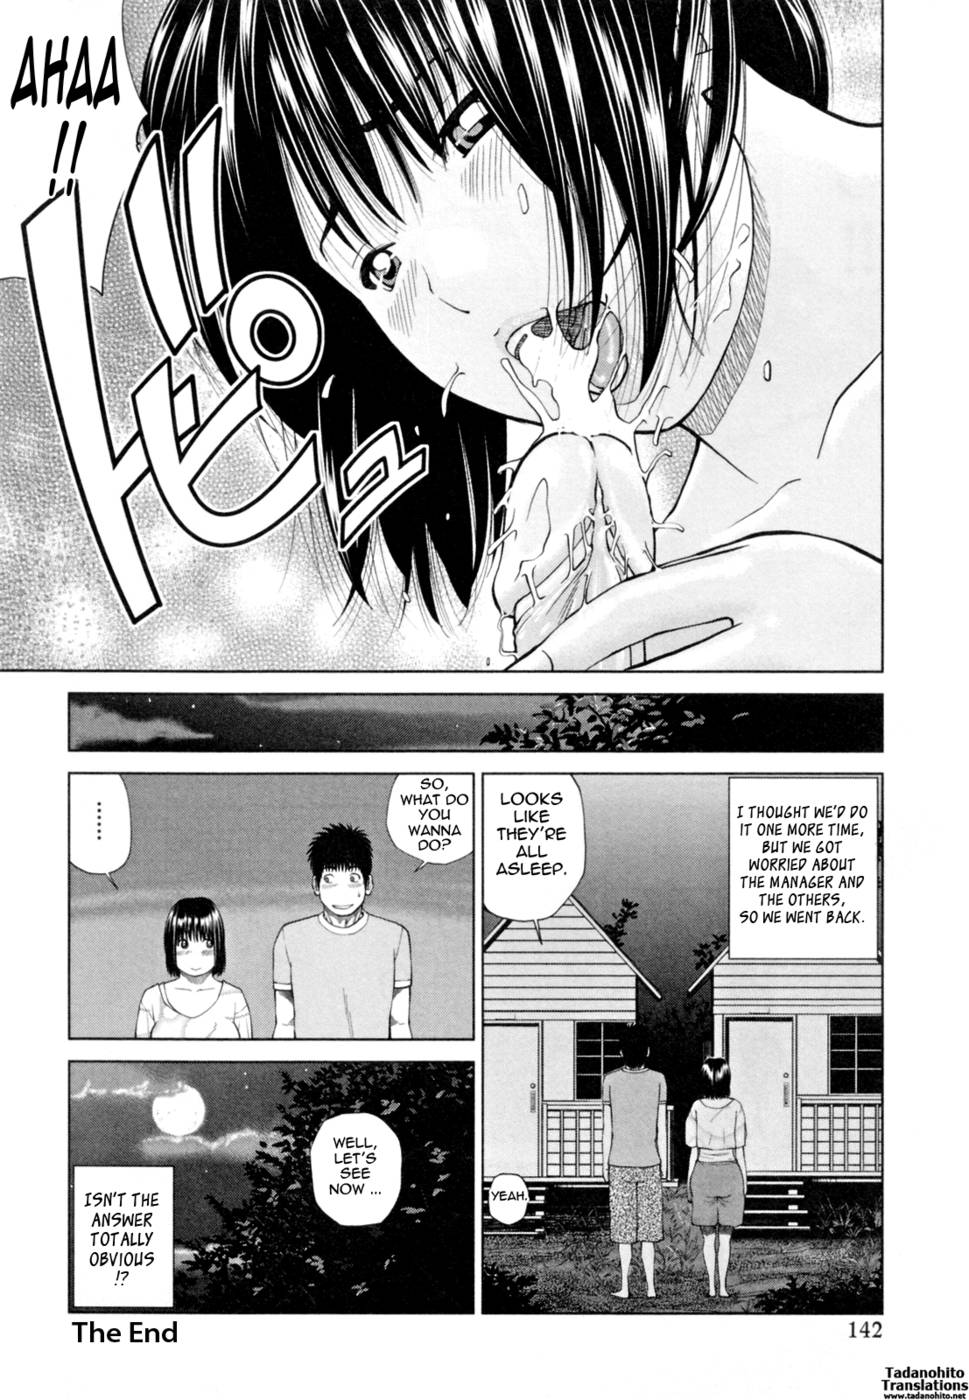 Hentai Manga Comic-32 Year Old Unsatisfied Wife-Chapter 7-Affair Camp-20